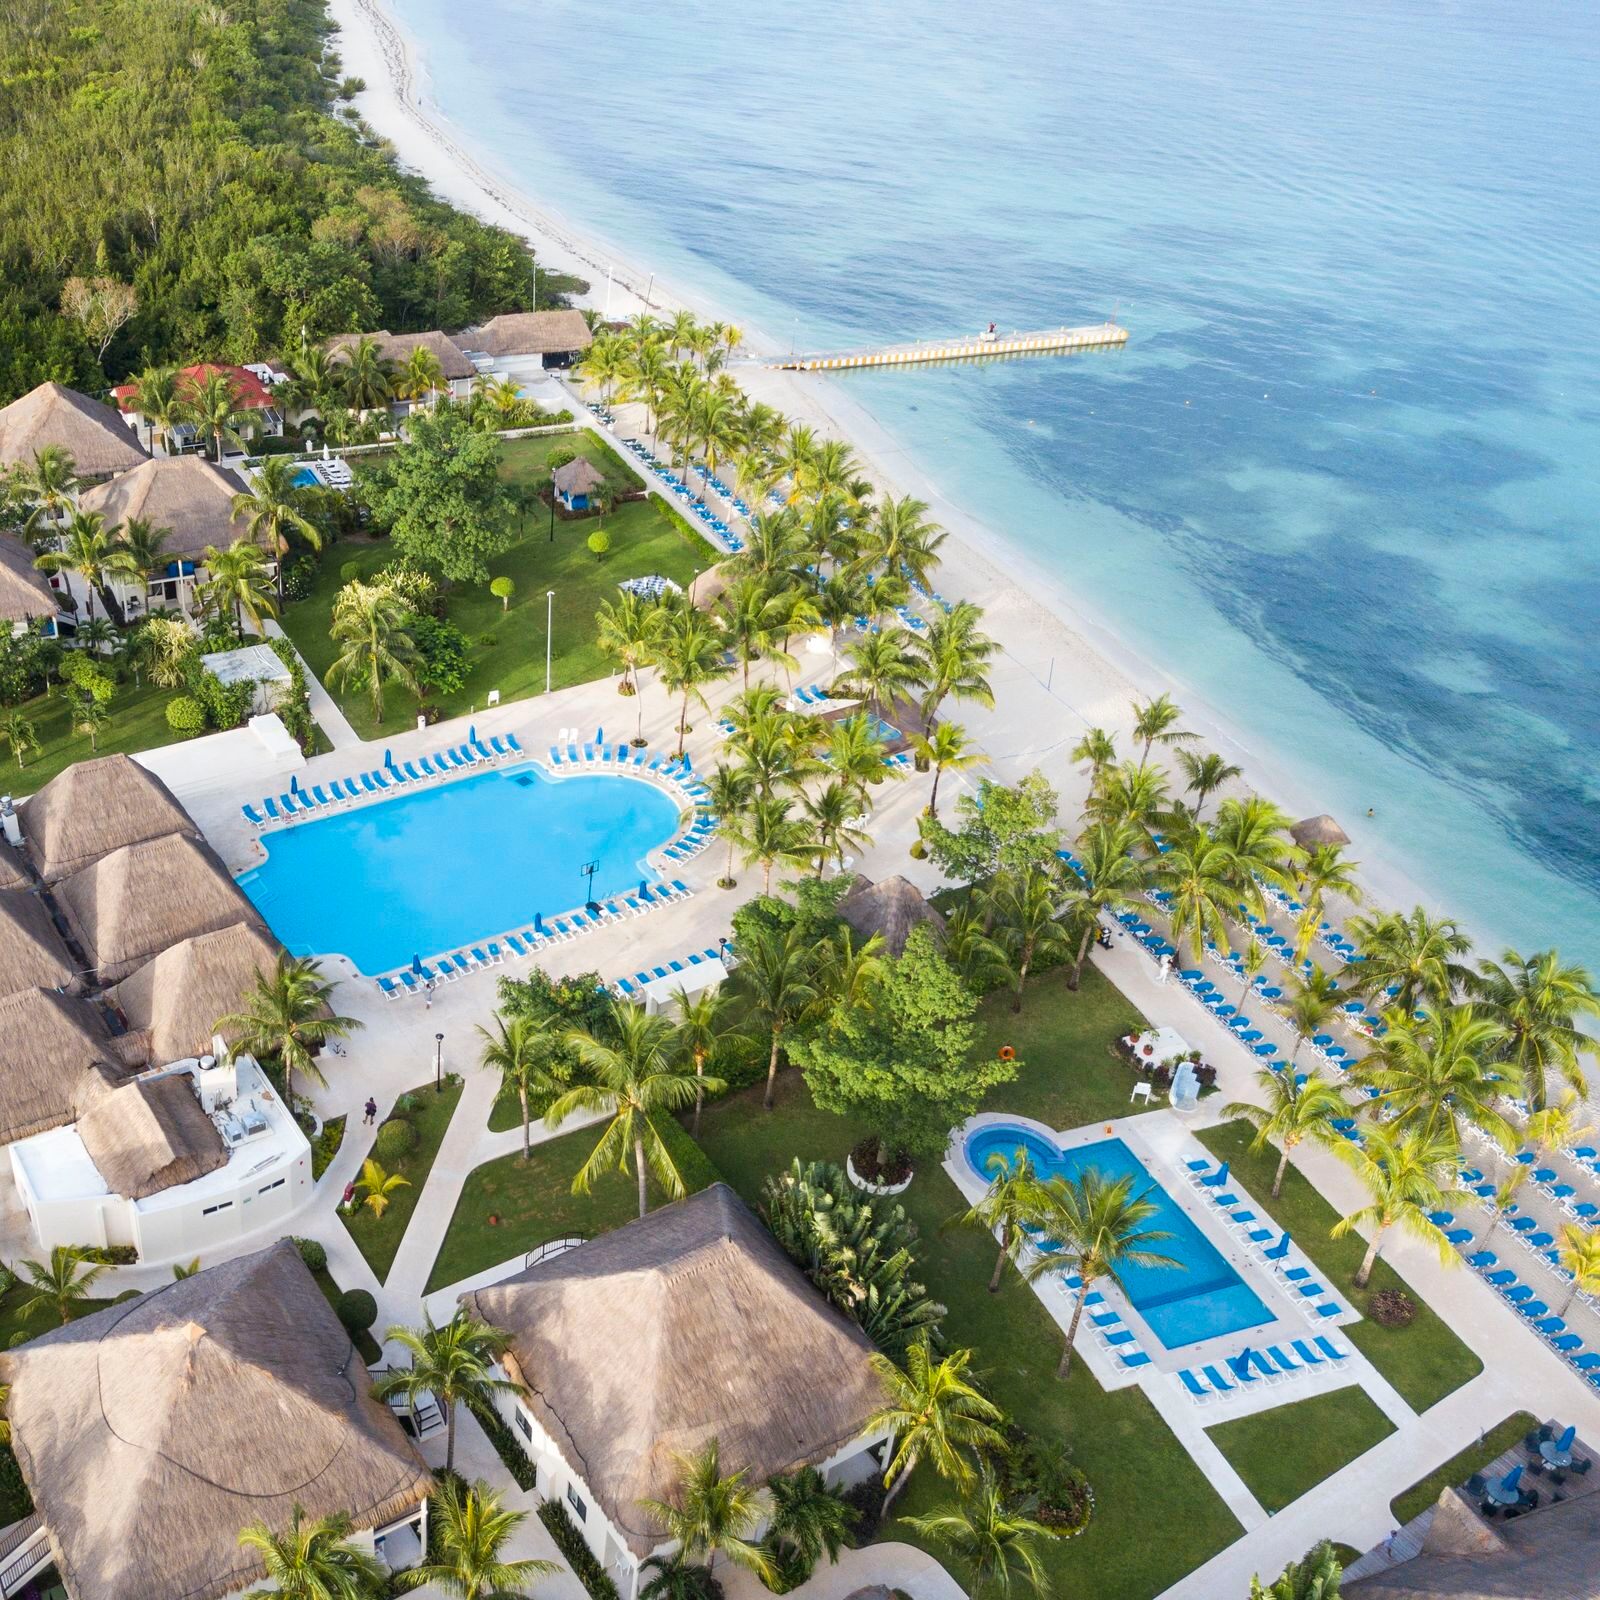 Hotel en Cozumel mejores playas de México